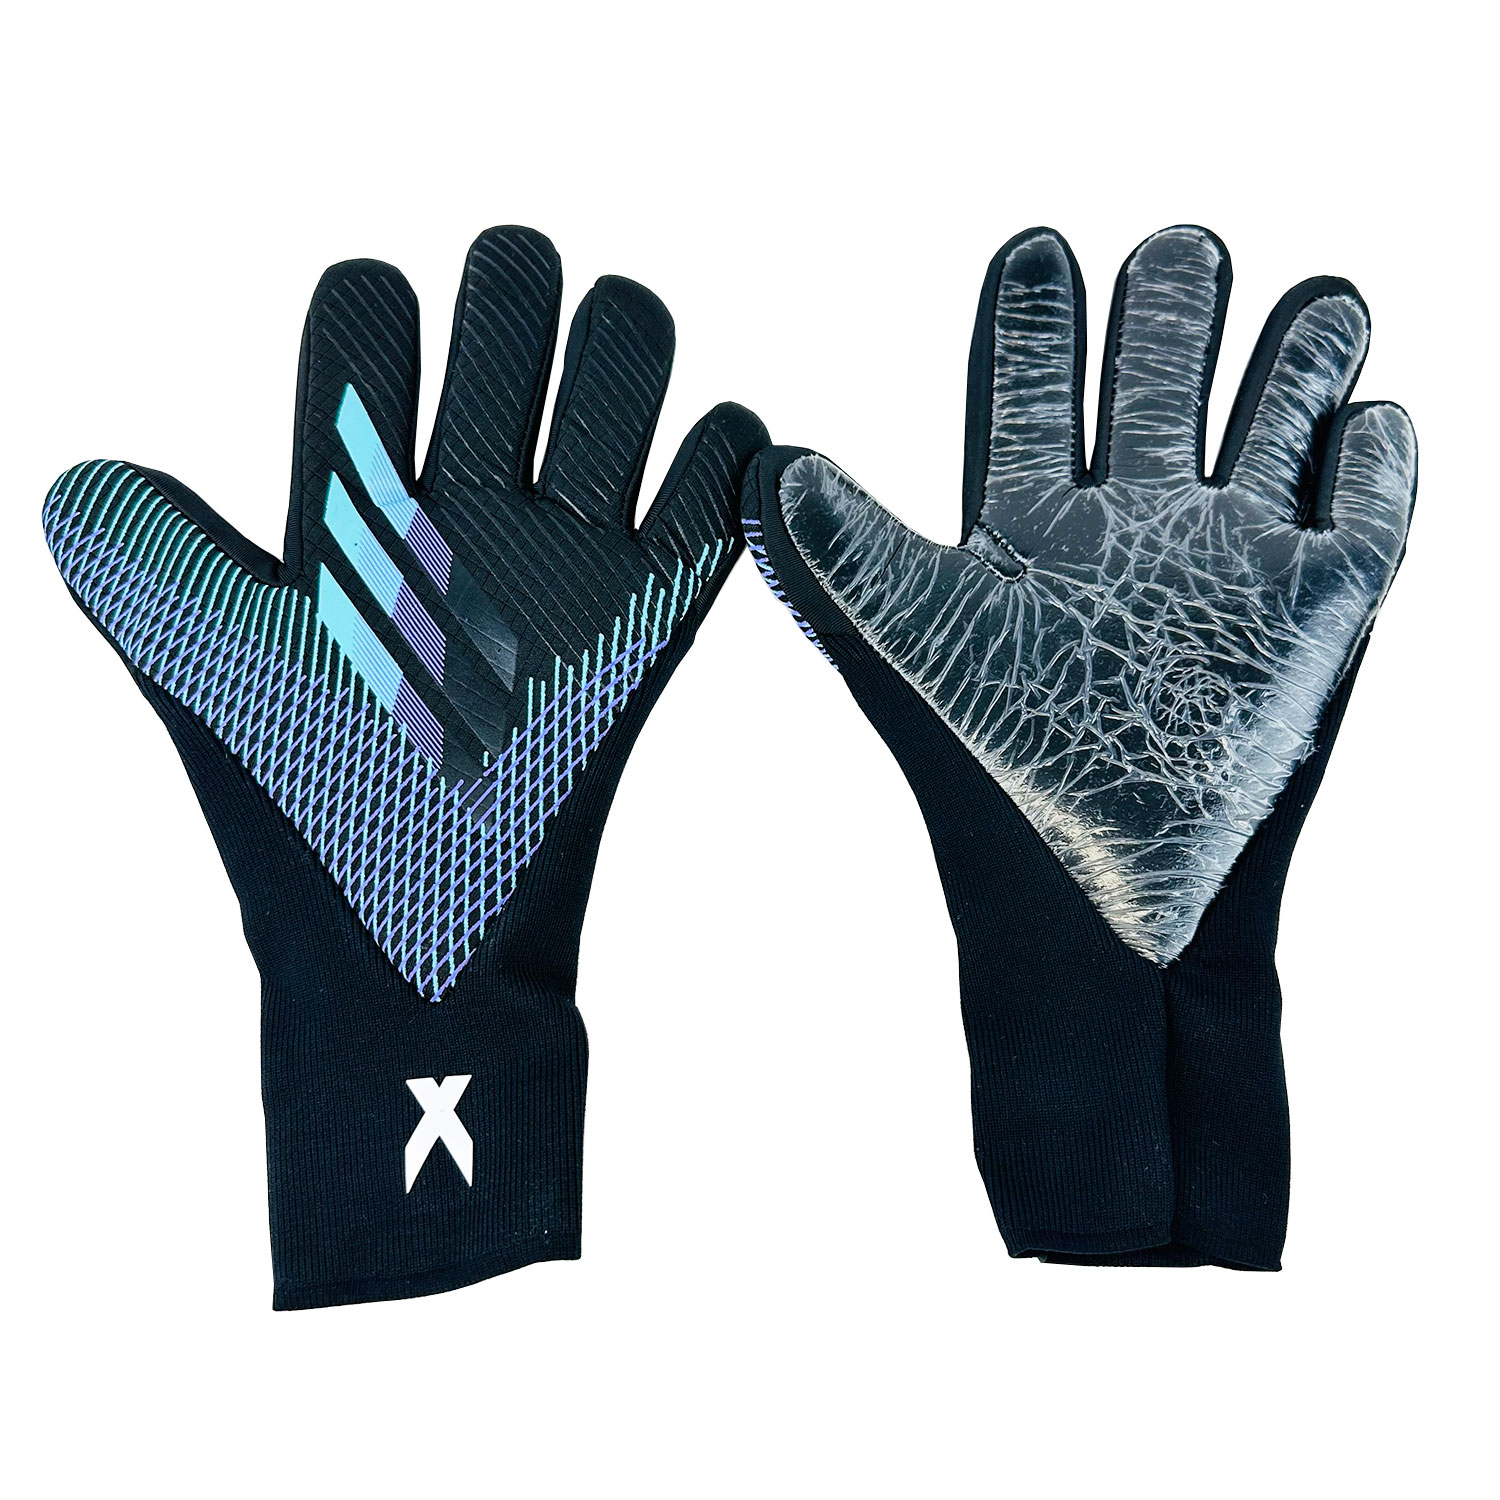 Вратарские перчатки Adidas X 